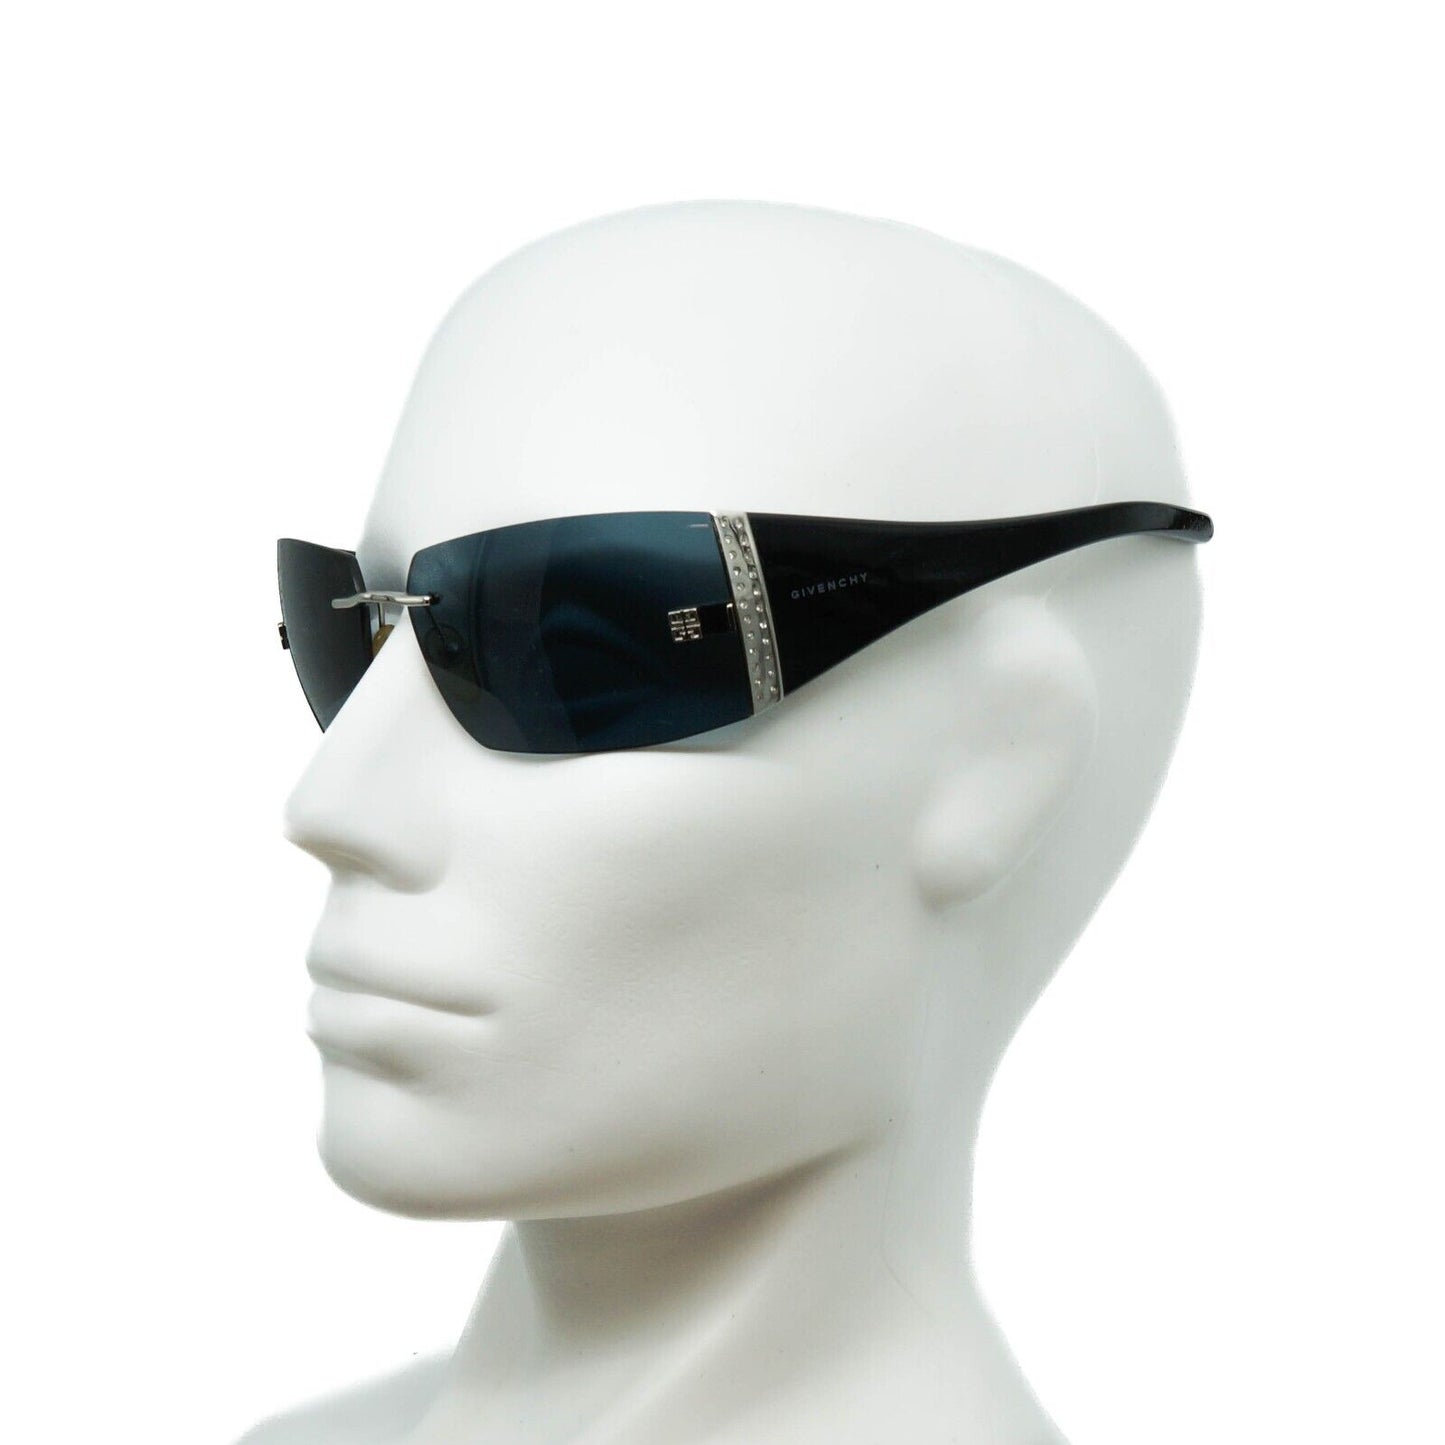 GIVENCHY SGV 095S Black Sunglasses Vintage 00s